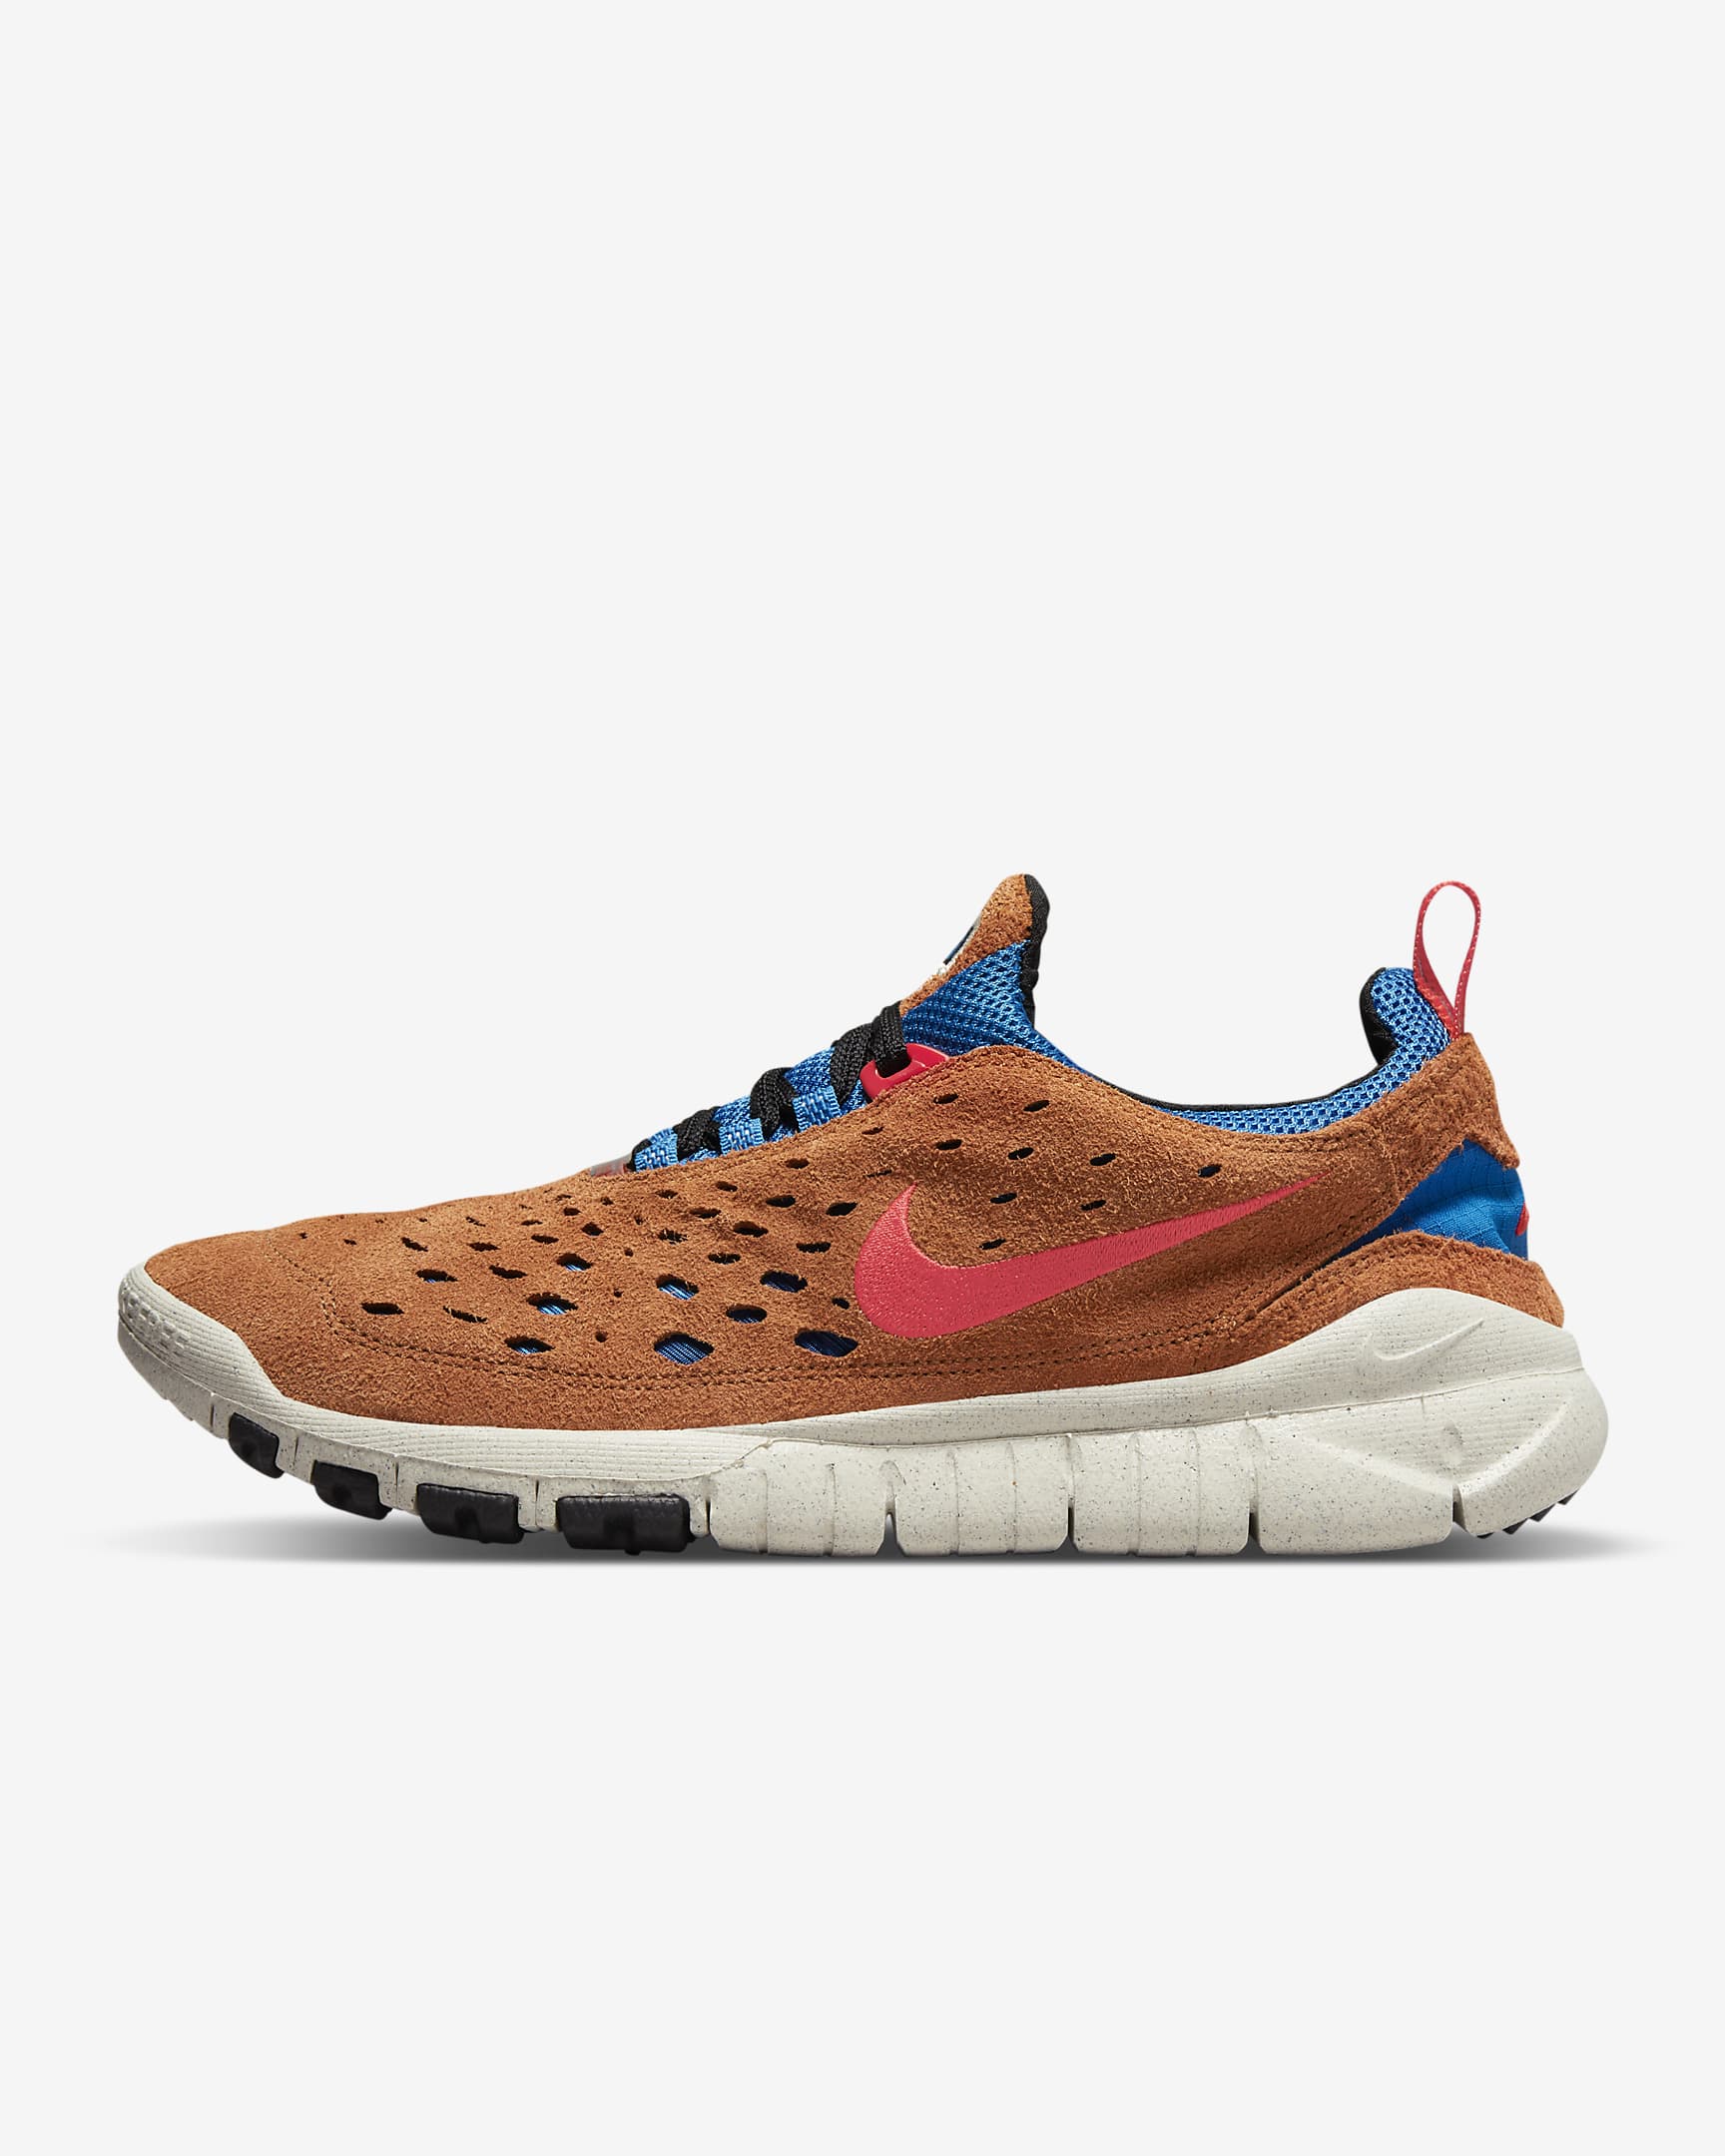 Nike Men's Free Run Trail Shoes (Dark Russet) $51.18 + free shipping